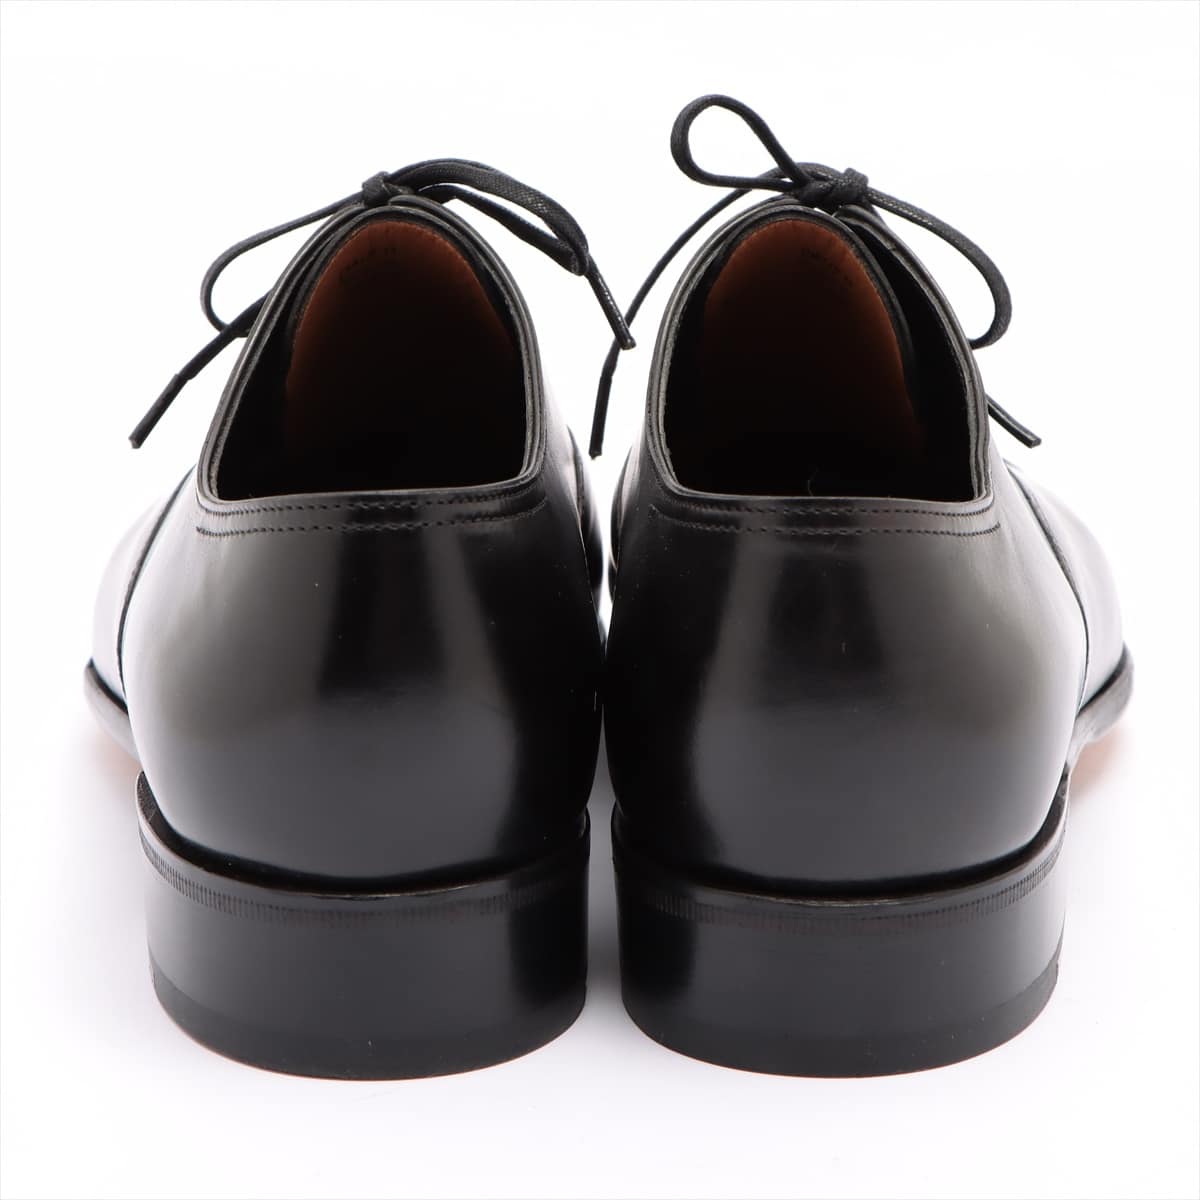 John Lobb Philipp 2 Leather Dress shoes 8 Men's Black With genuine shoe tree